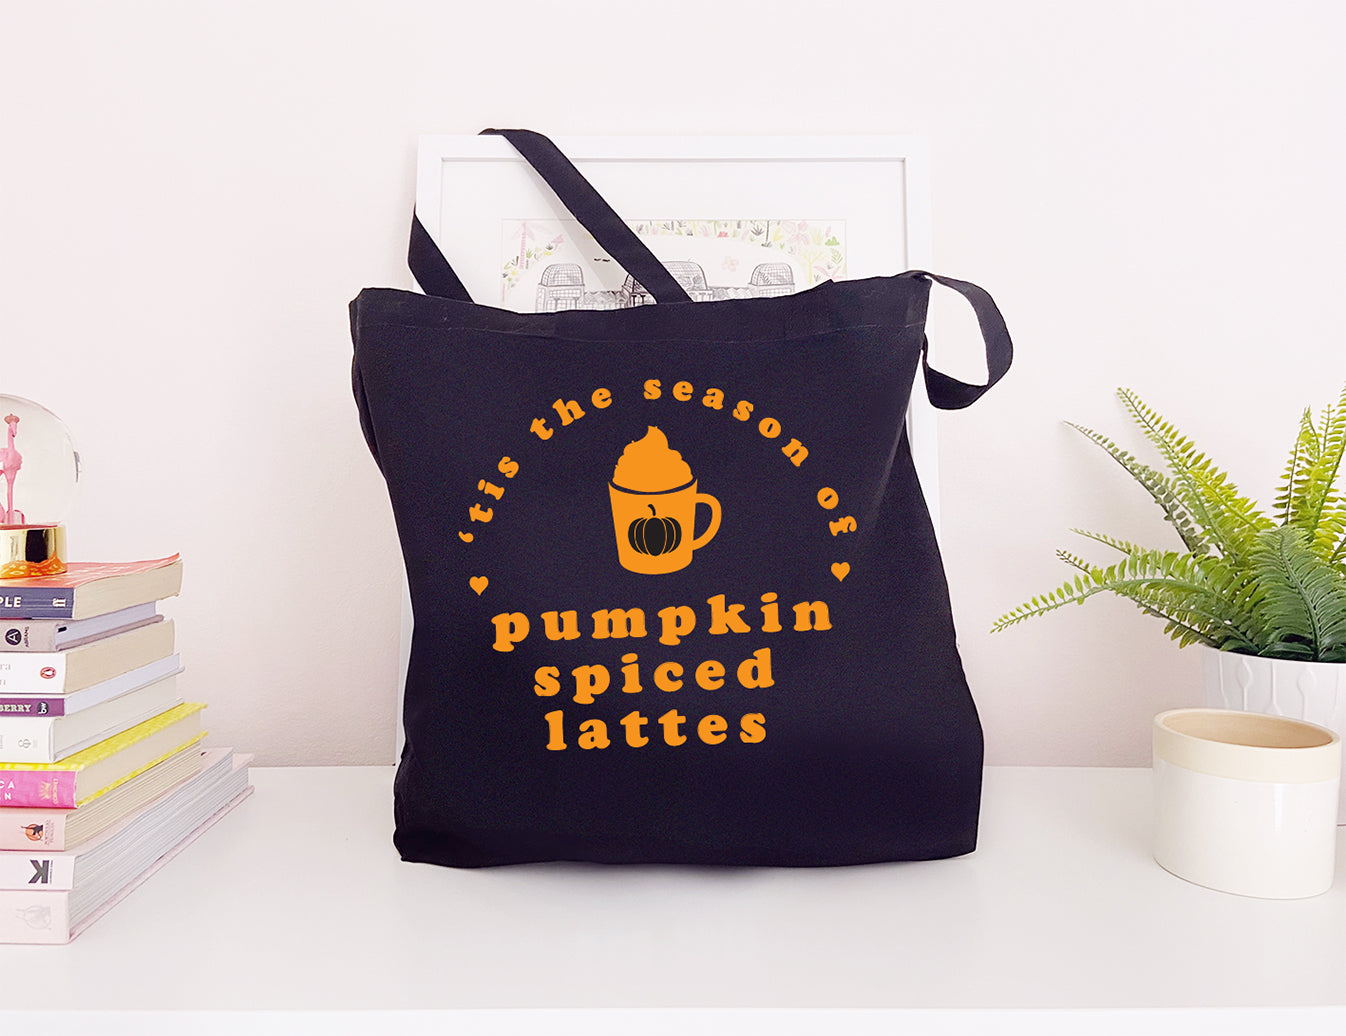 Tis' The Season of Pumpkin Spiced Lattes - Large Canvas Tote Bag